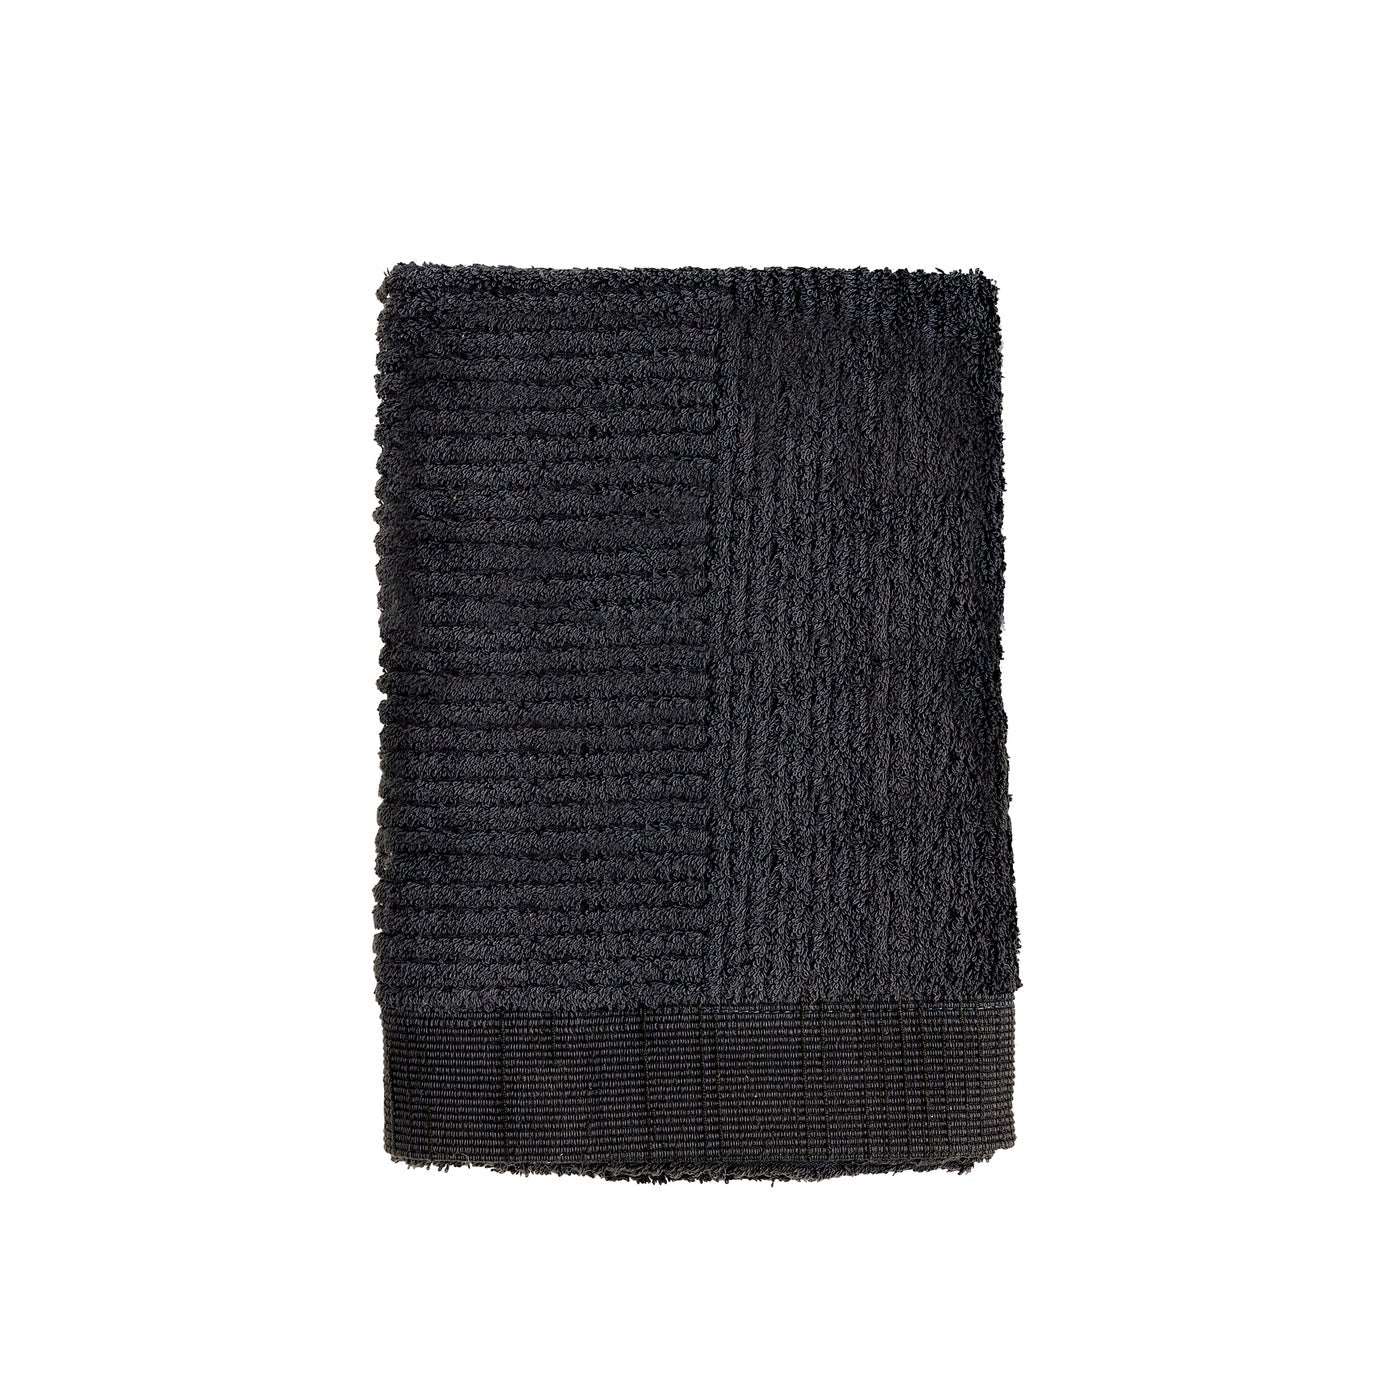 ZONE CLASSIC Towel - Cotton - KitchenEnvy